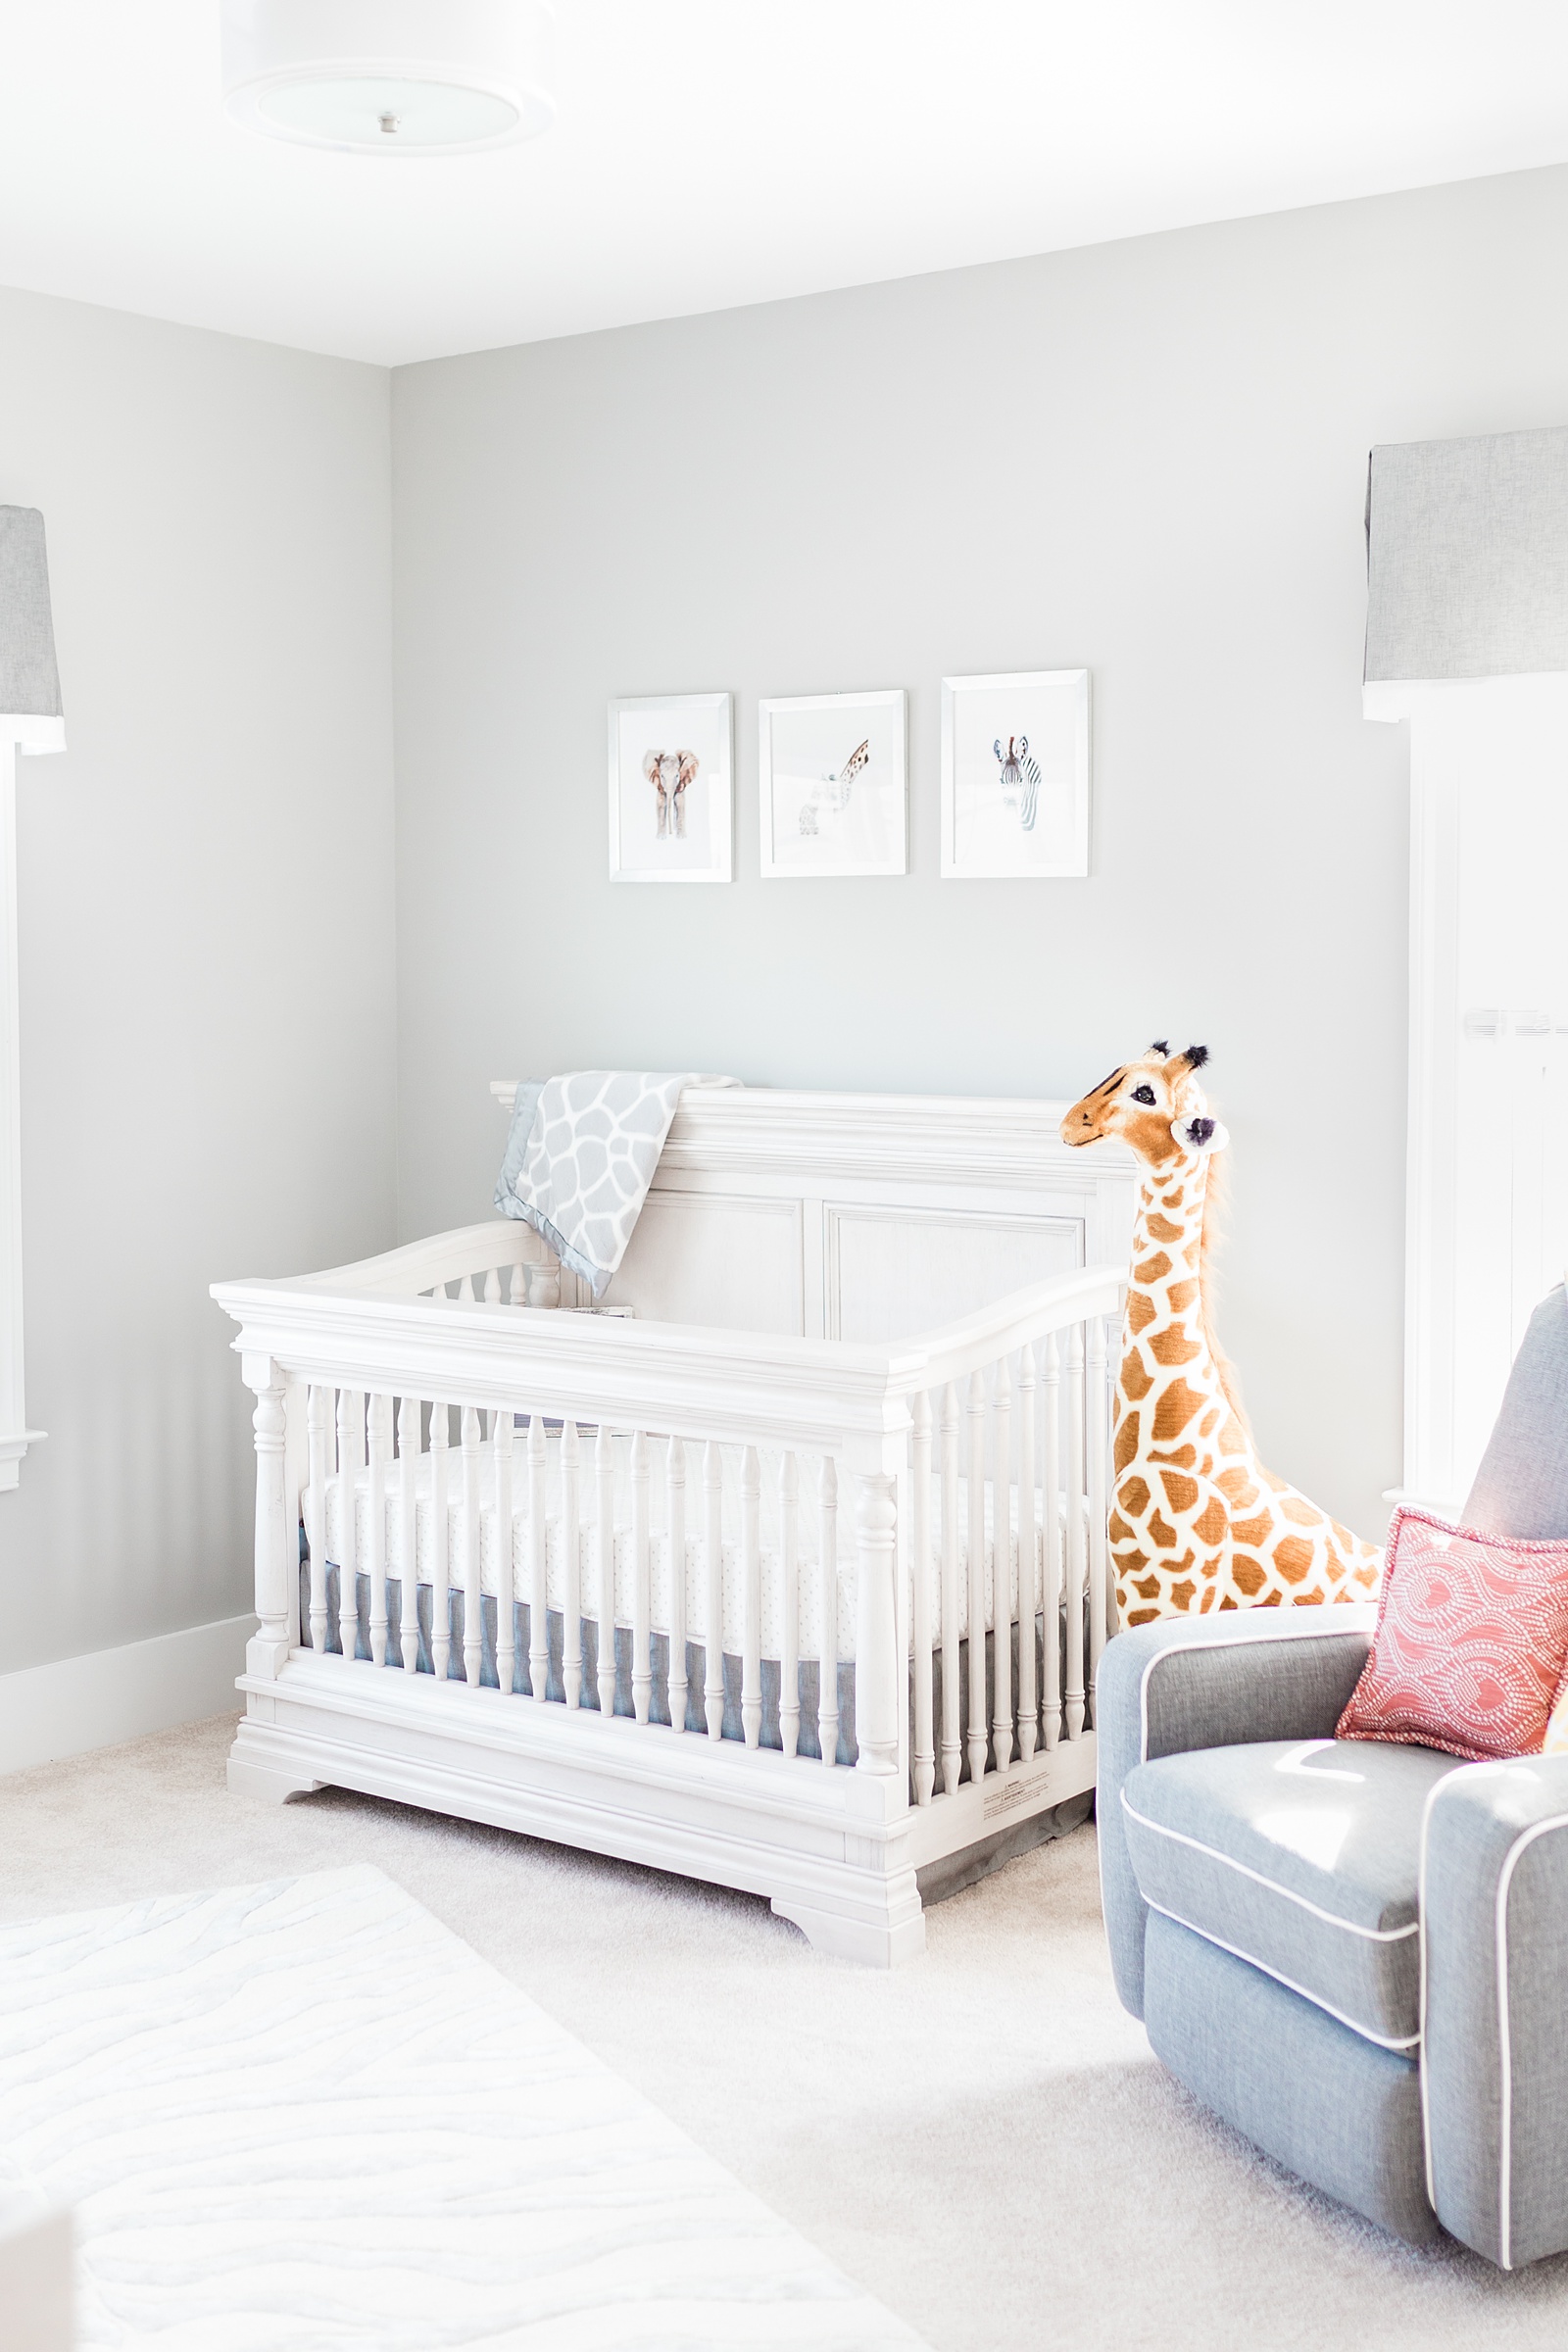 Grey nursery details with safari theme during lifestyle newborn session by Charleston newborn photographer, Caitlyn Motycka Photography